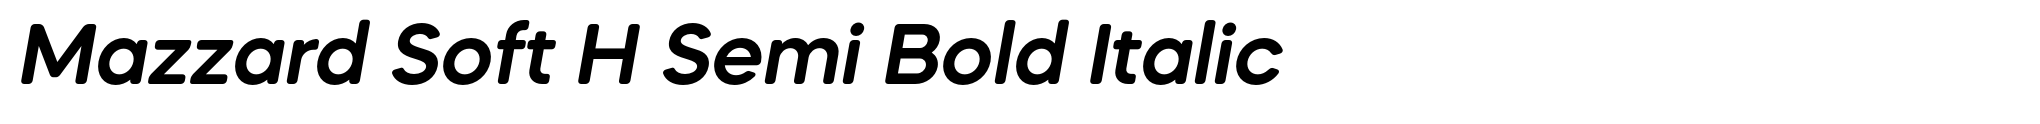 Mazzard Soft H Semi Bold Italic image